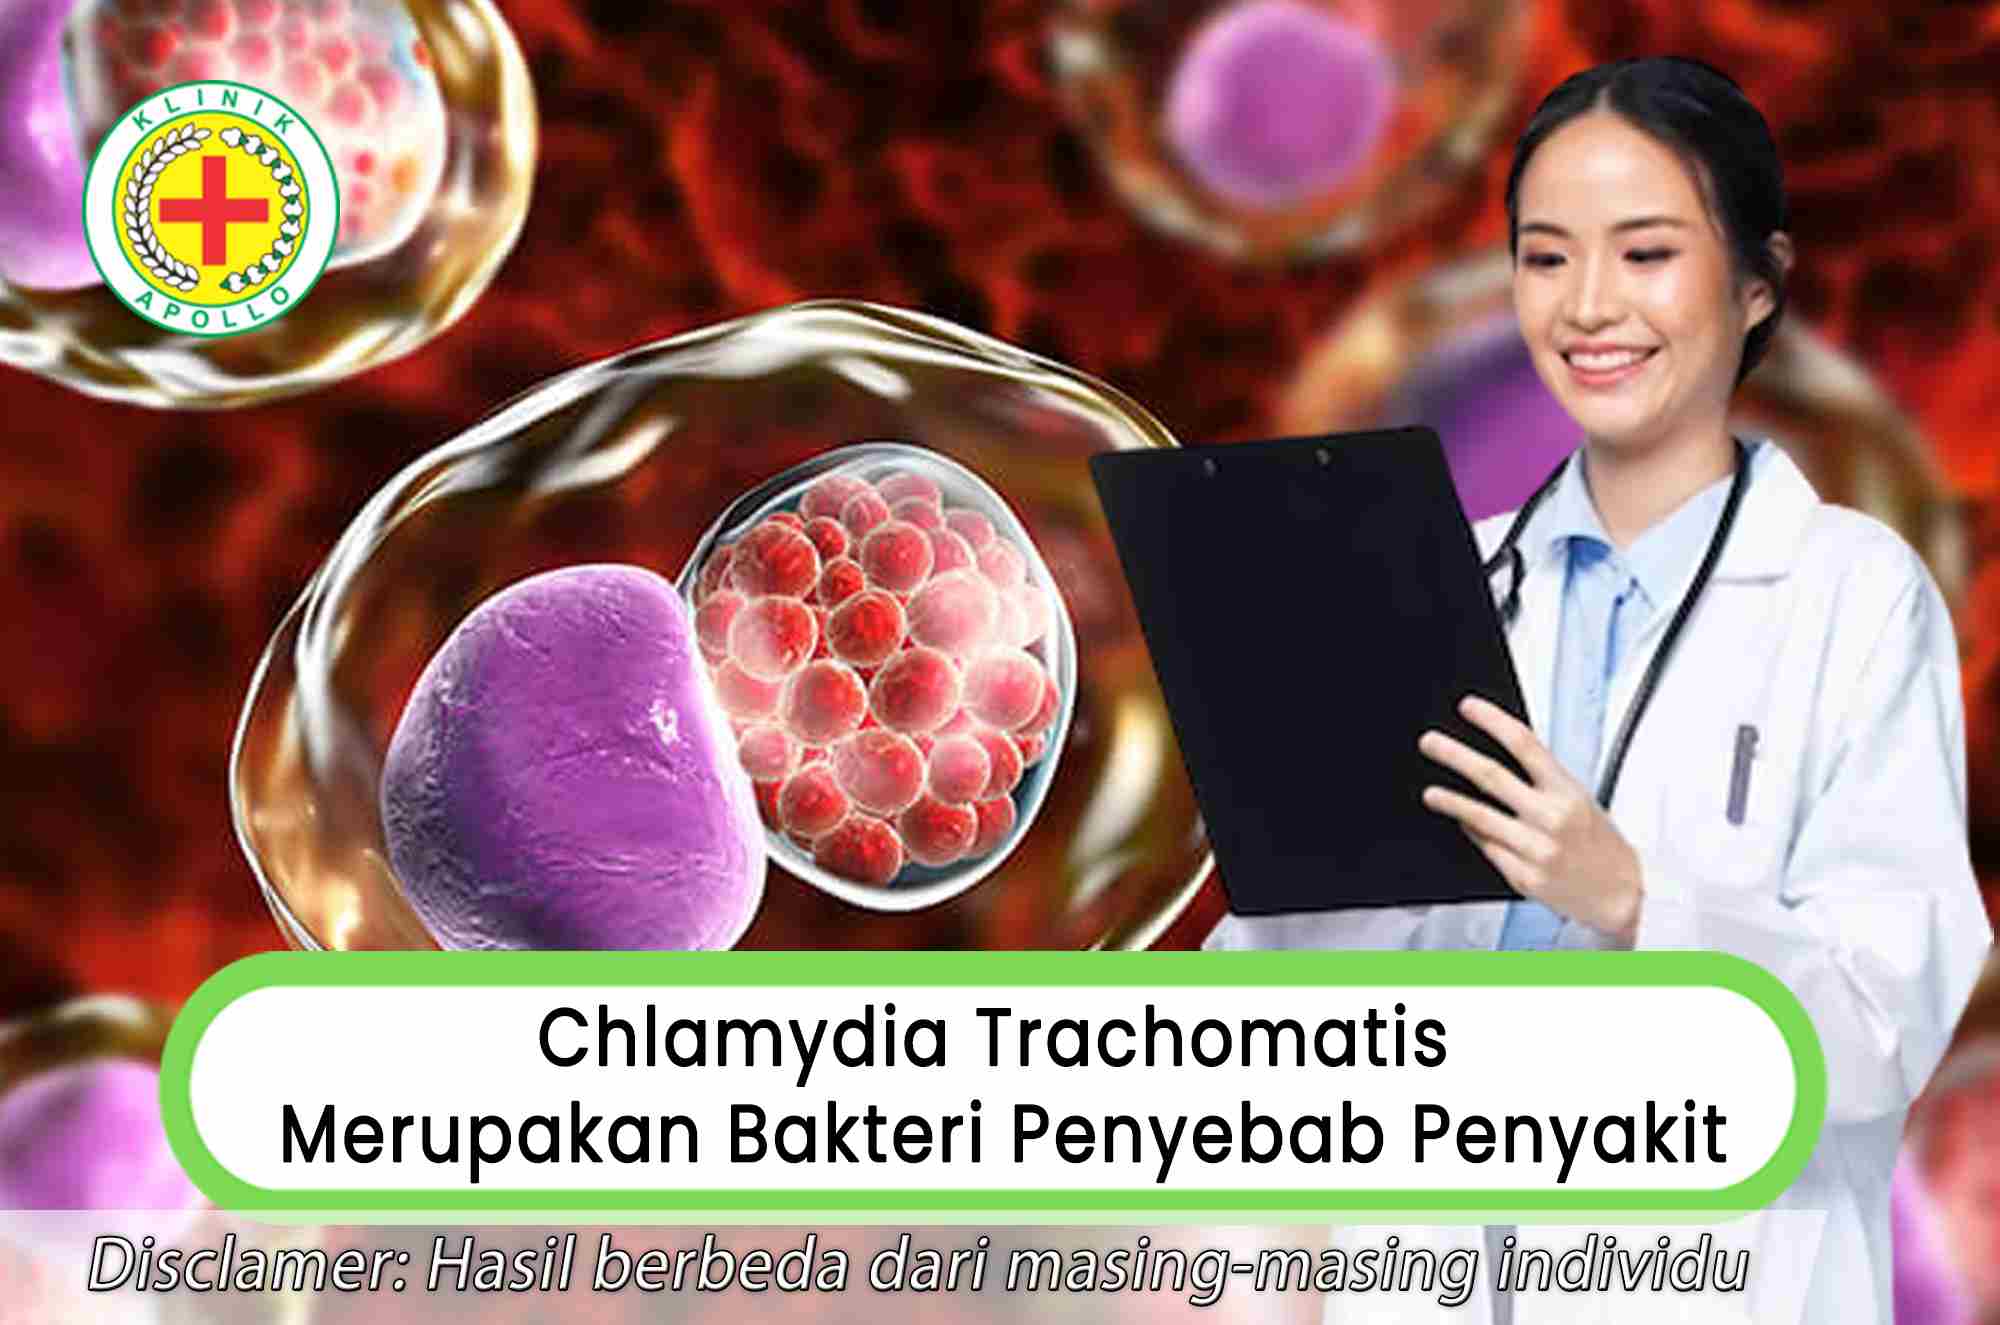 Salah satu chlamydia trachomatis merupakan bakteri penyebab penyakit menular seksual (PMS) dan perlu penanganan.